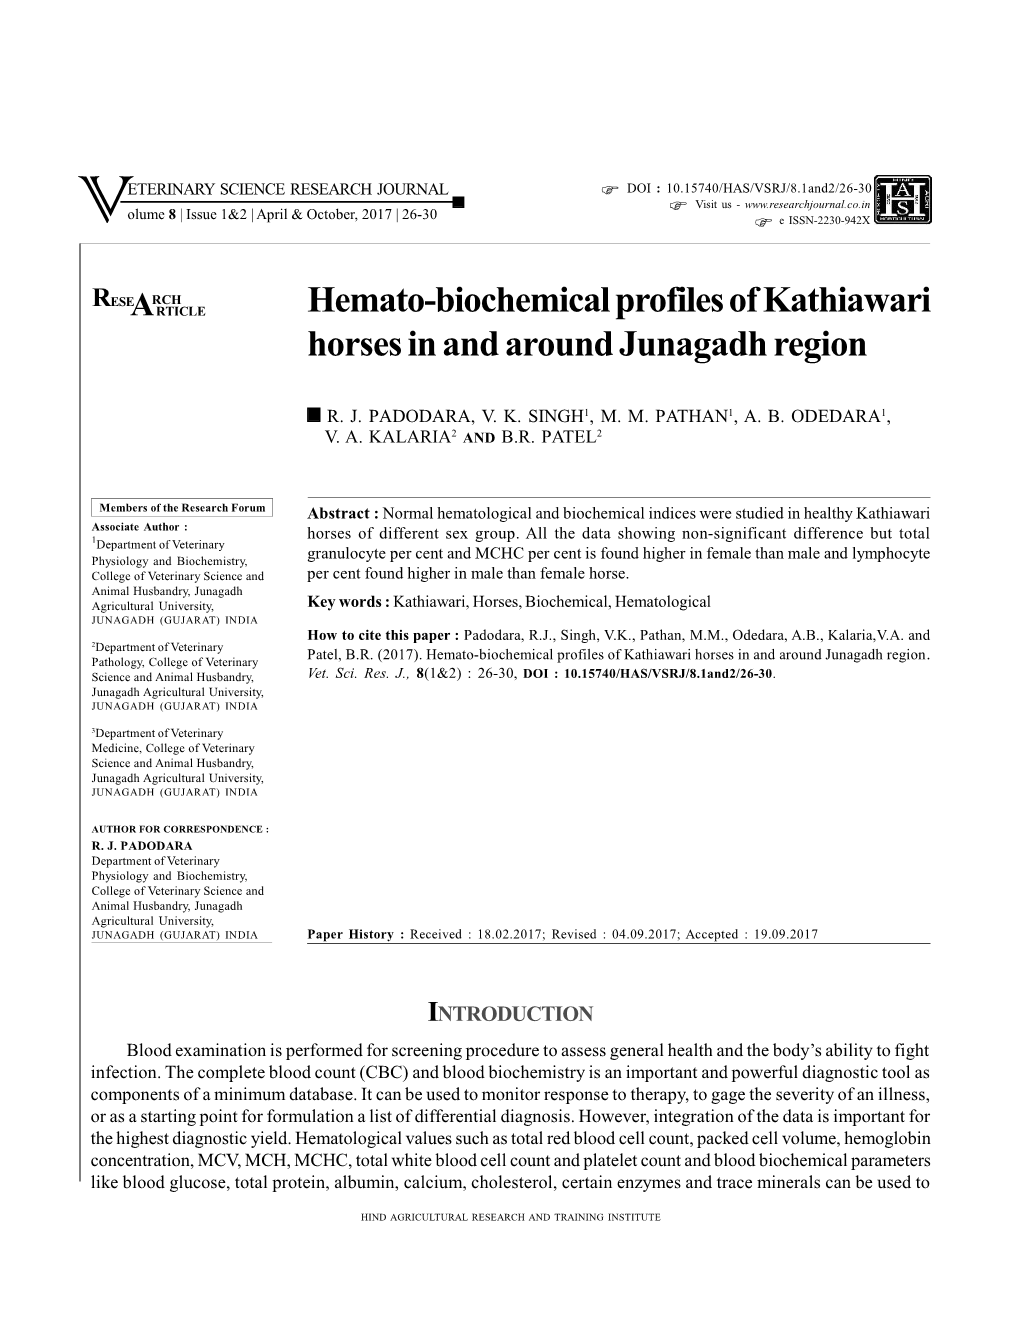 Hemato-Biochemical Profiles of Kathiawari Horses in and Around Junagadh Region